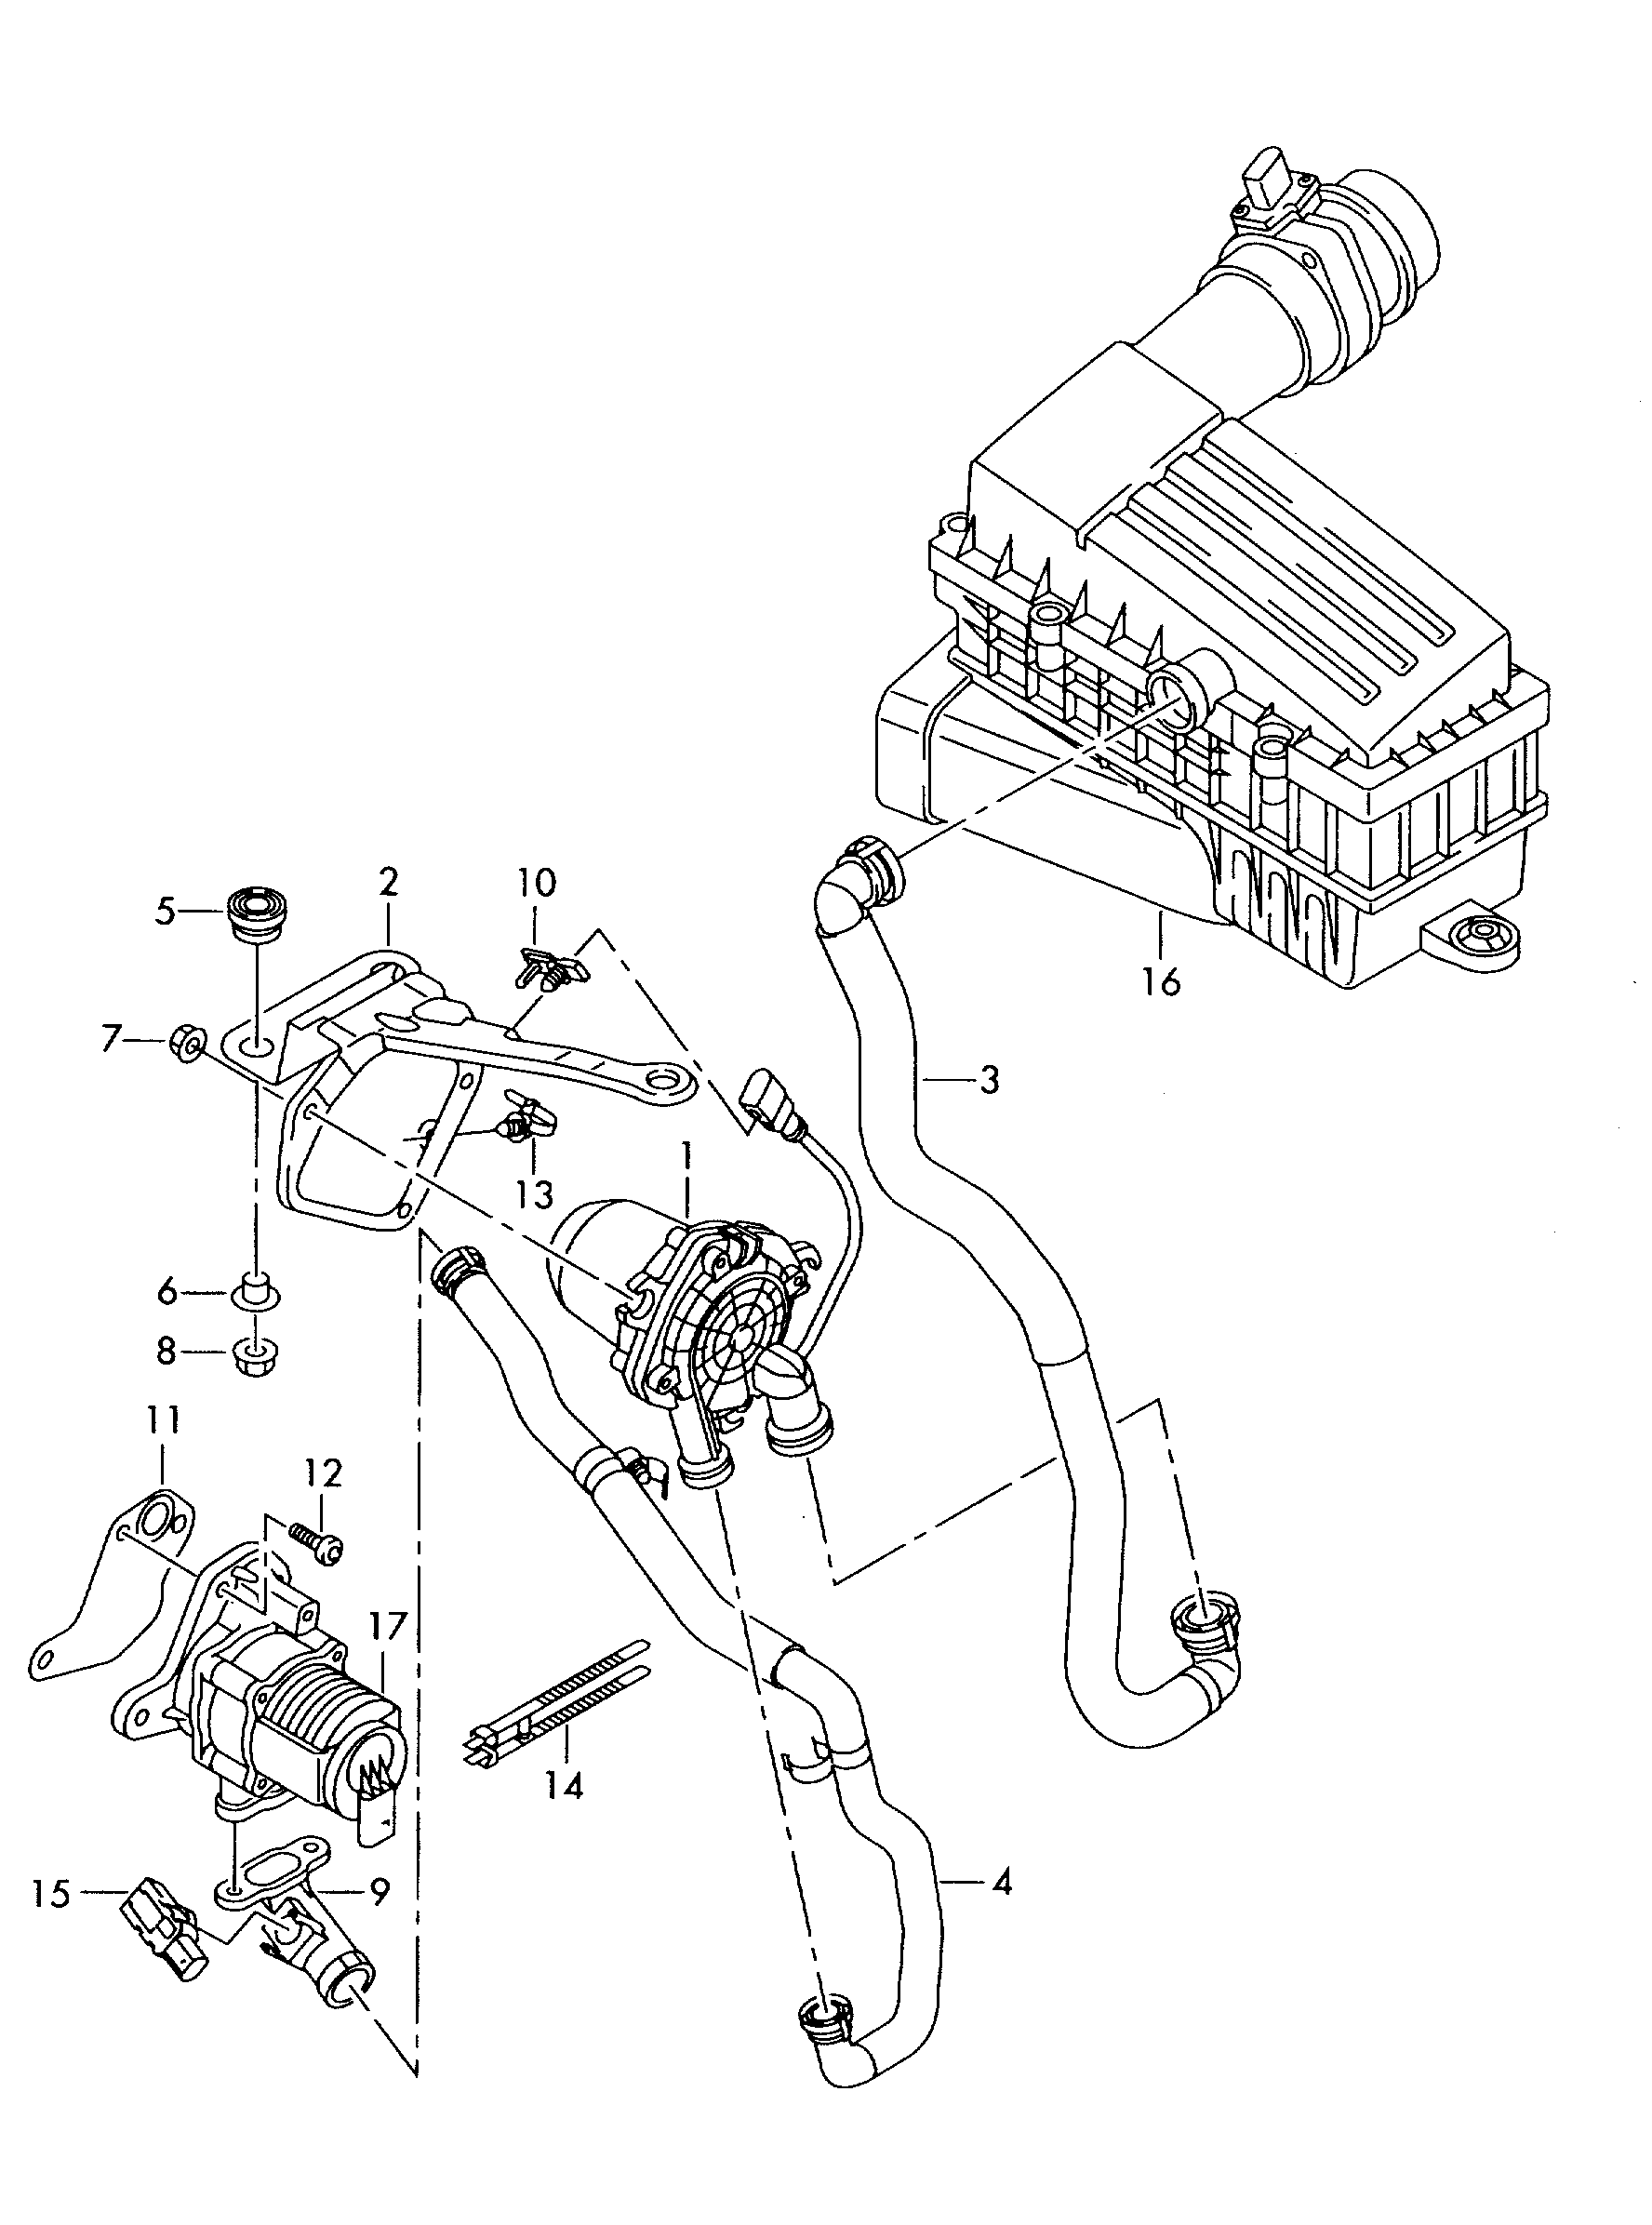 Secondary air pump 2.0 Ltr. - Golf/Variant/4Motion - golf